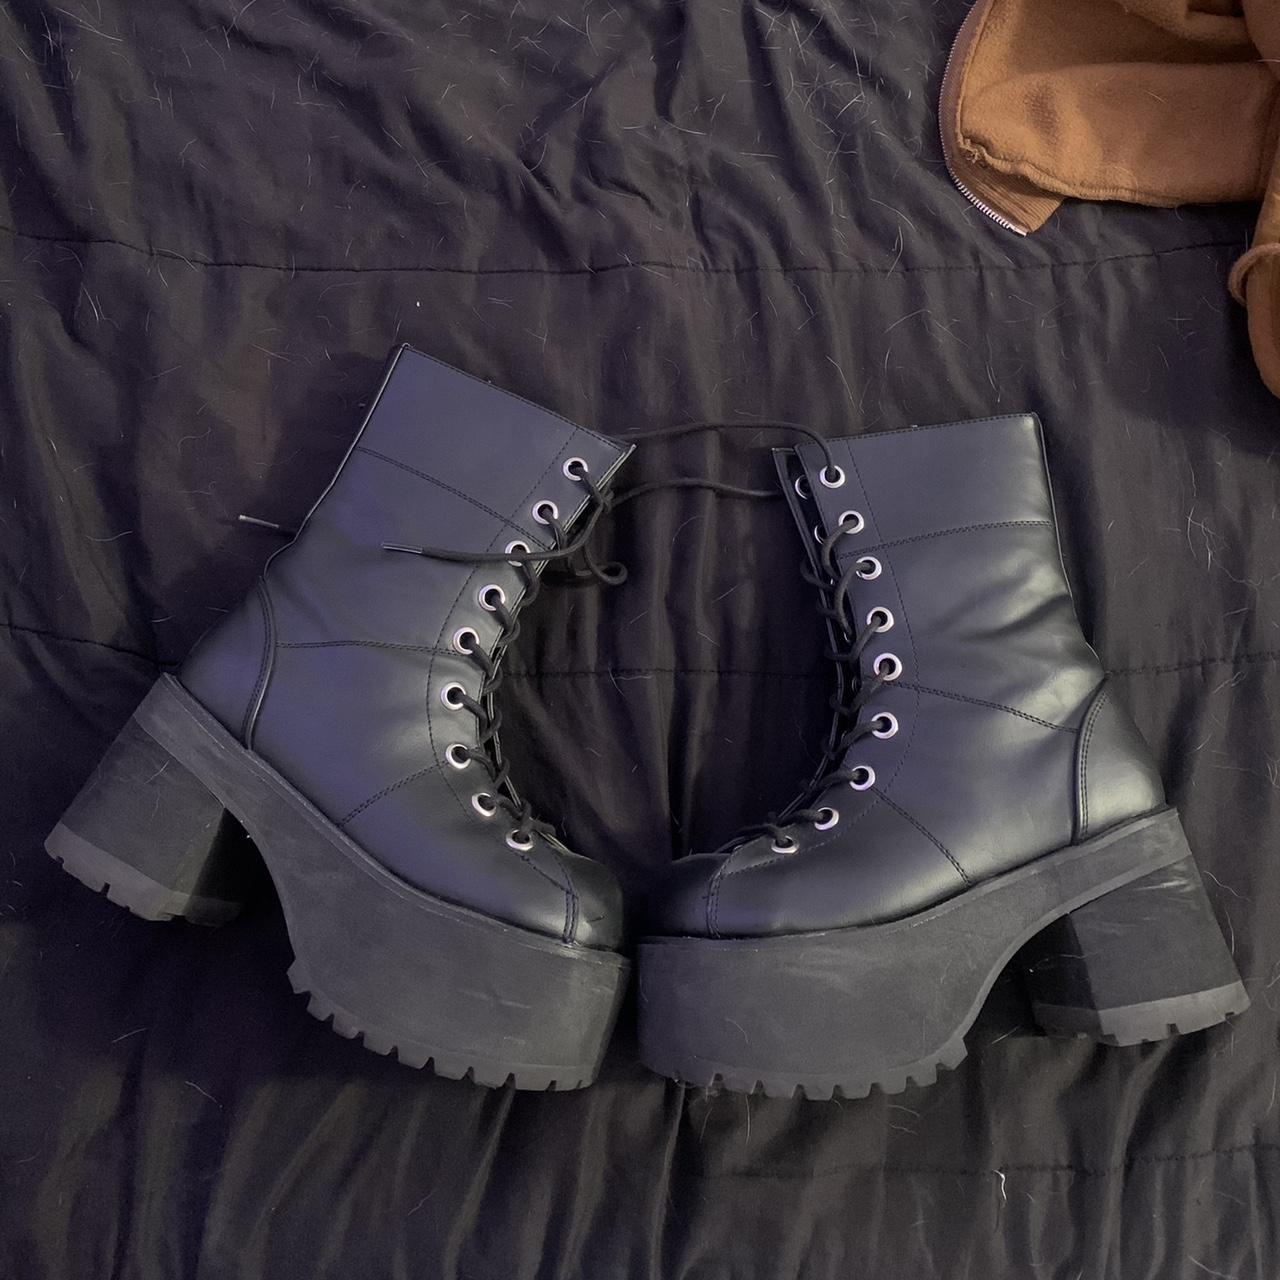 Demonia Women's Black Boots (2)